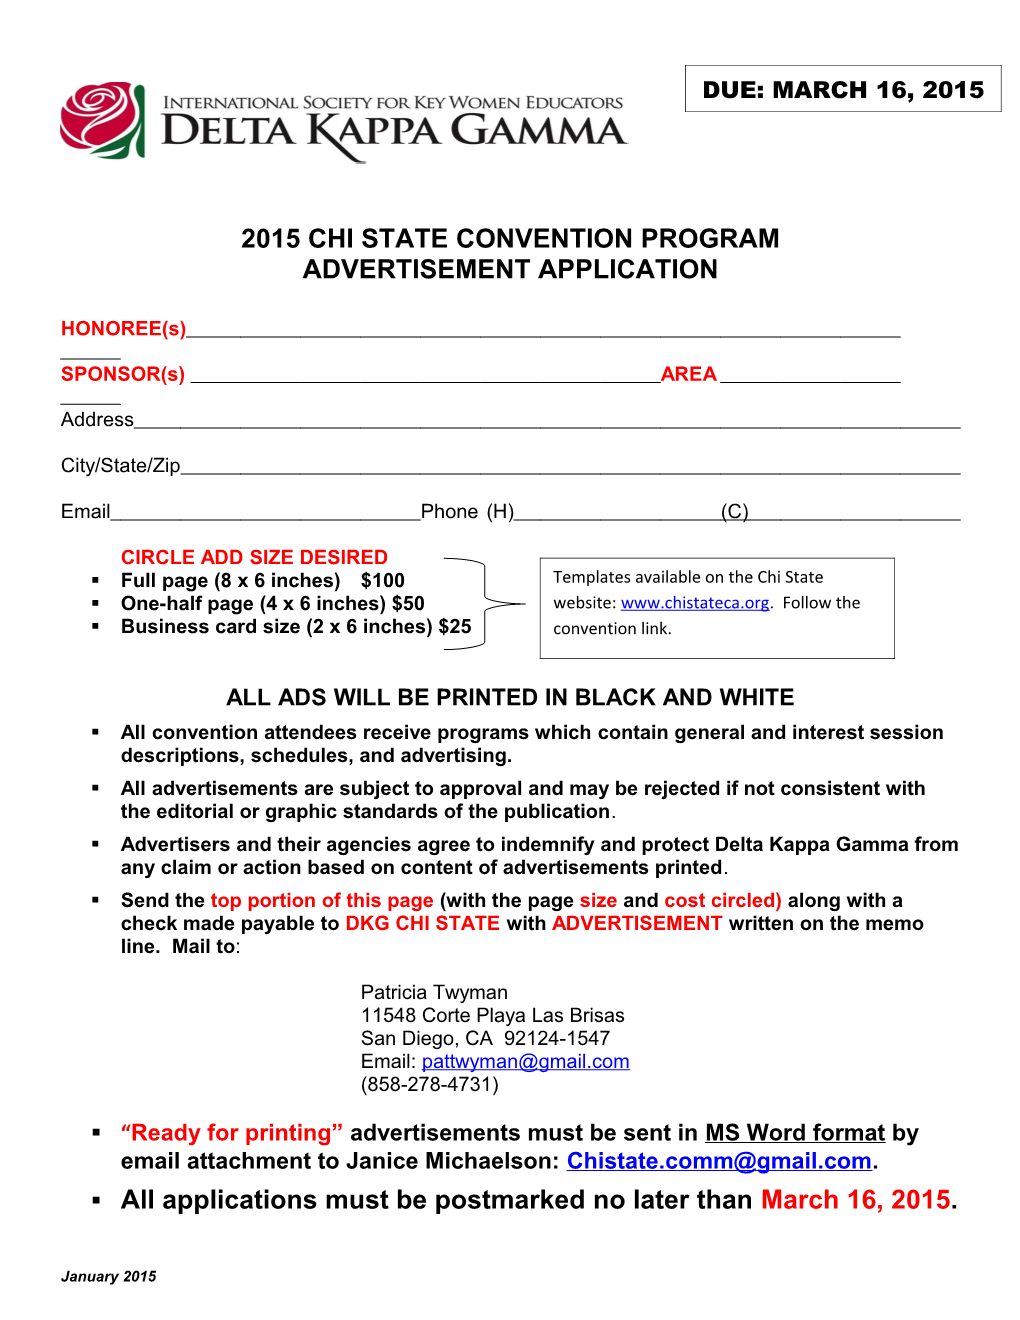 2015 Chi State Convention Program